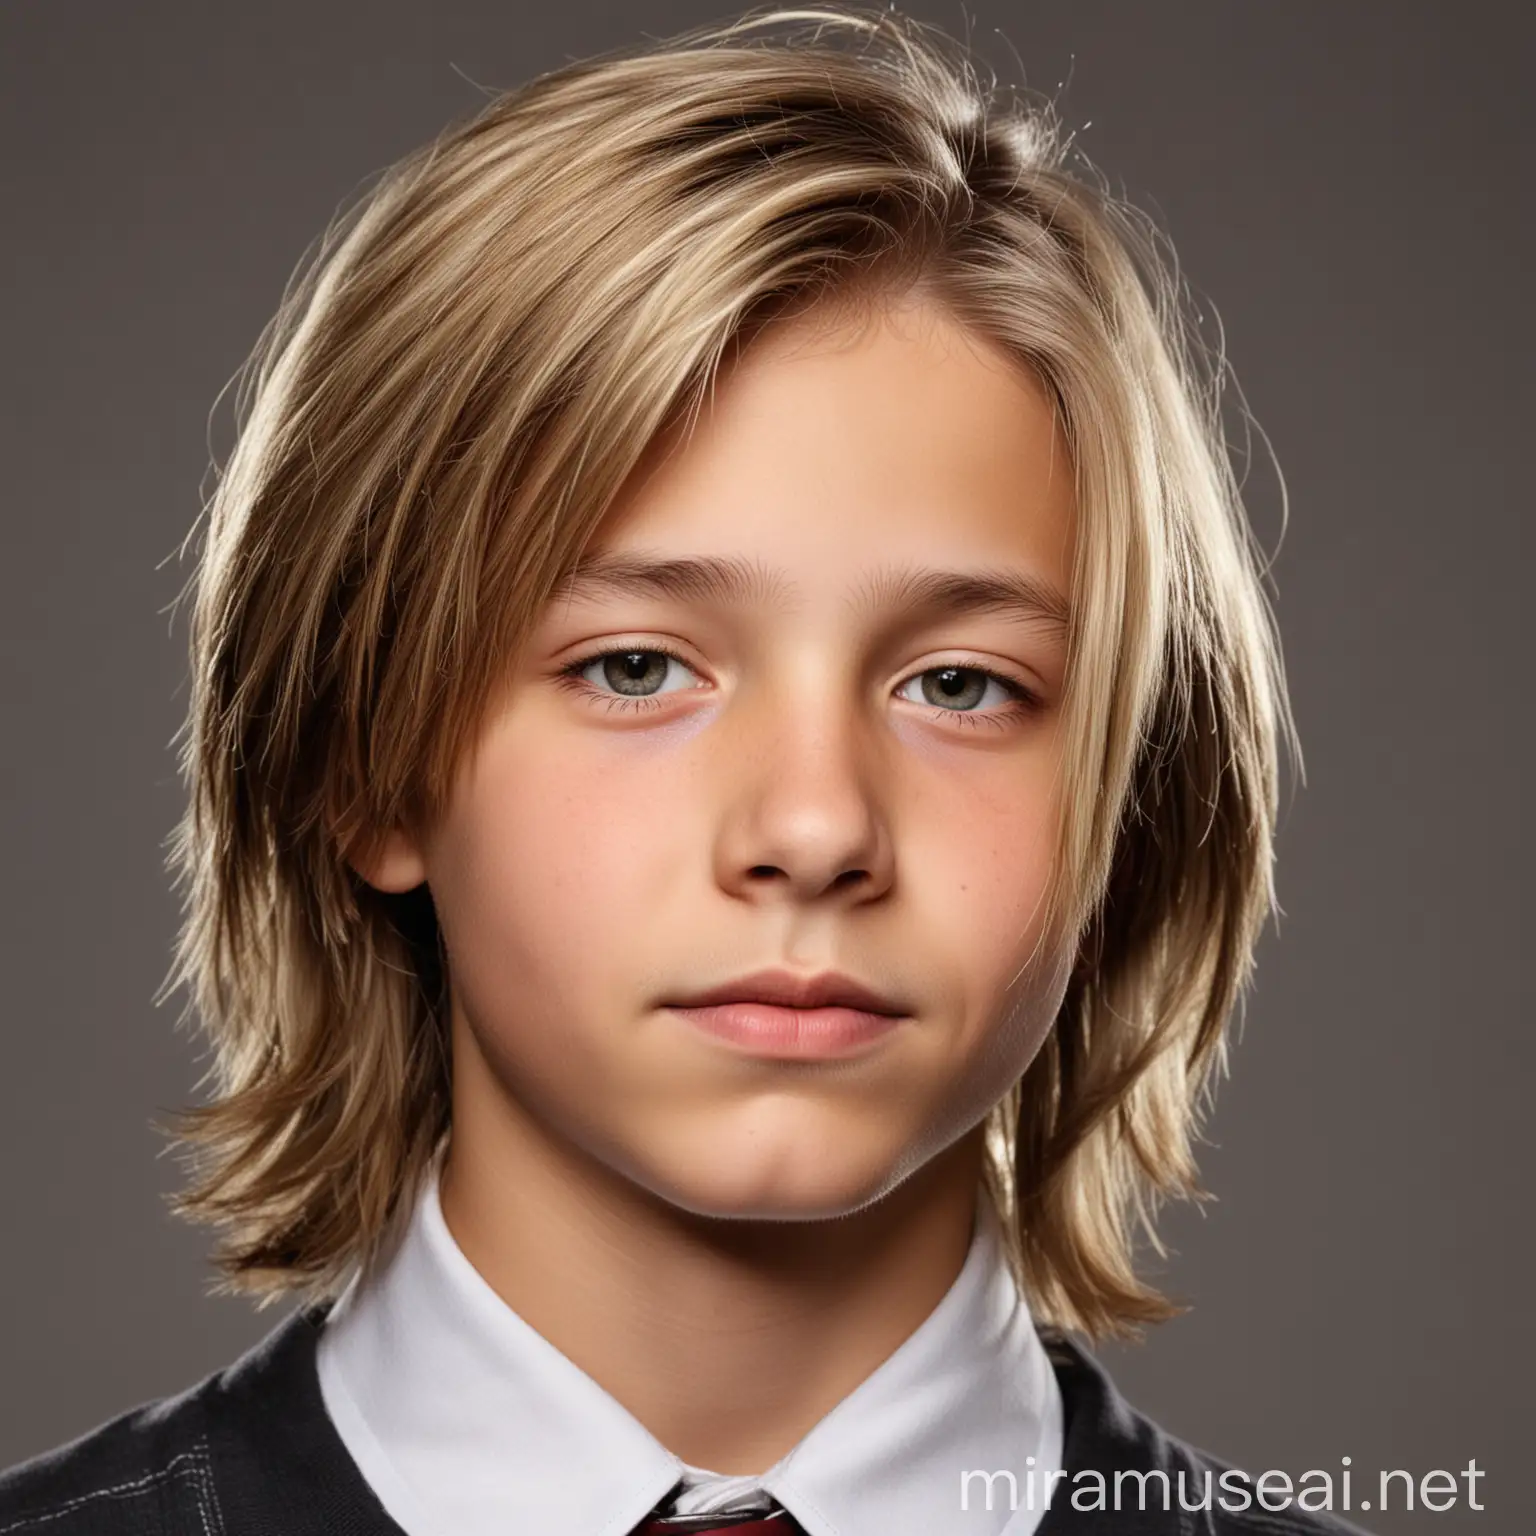 CloseUp Portrait of Stylish ThirteenYearOld Boy with Soft Shiny Hair